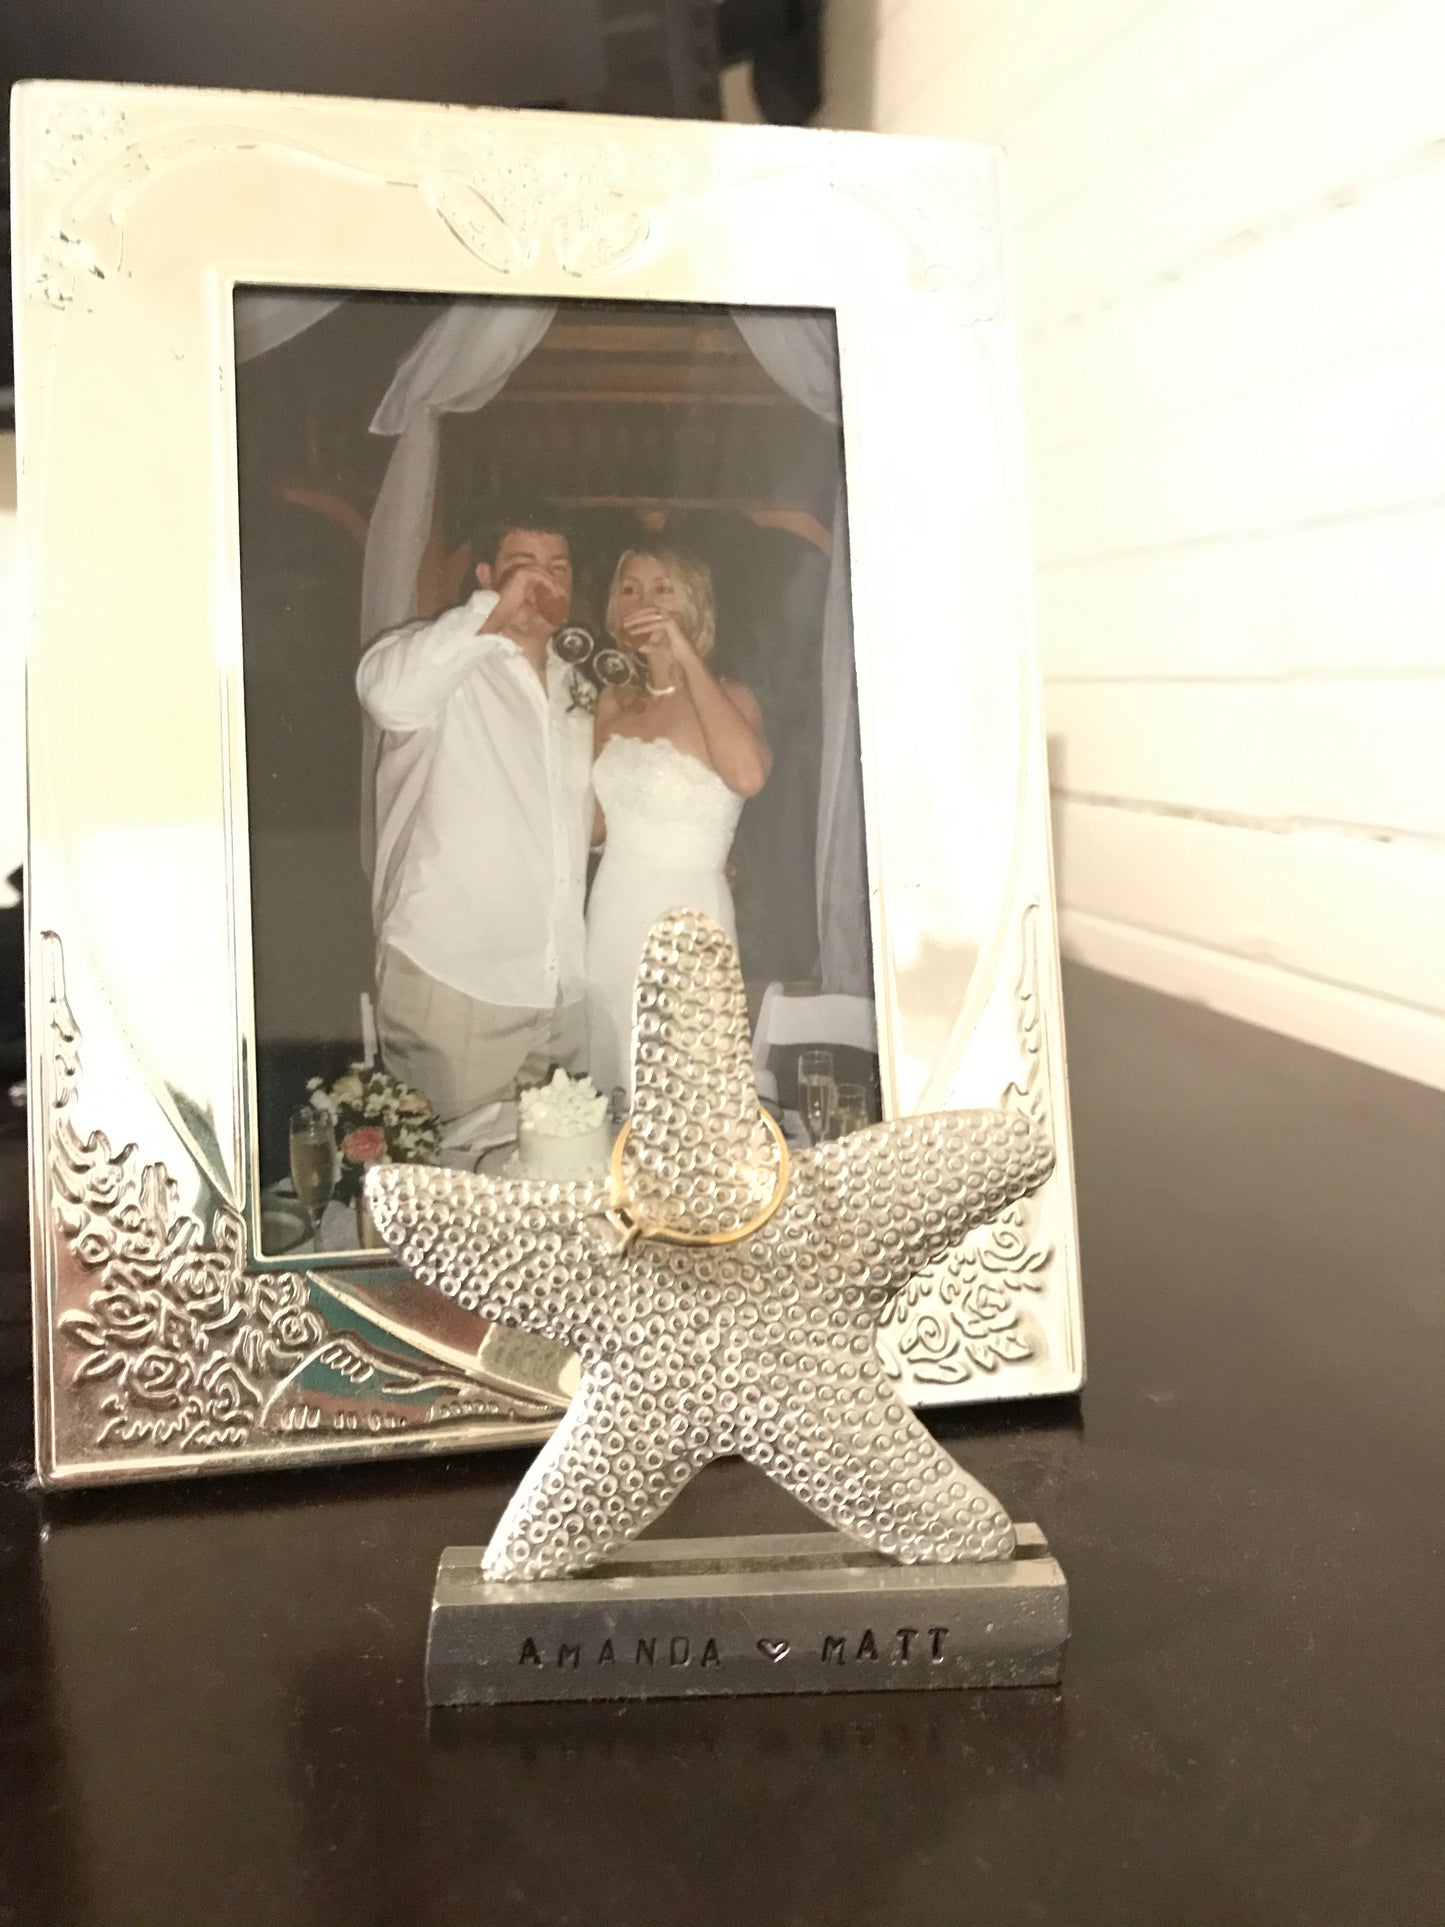 Wedding Party Favors - Metal Starfish Place Marker Holder - Bulk